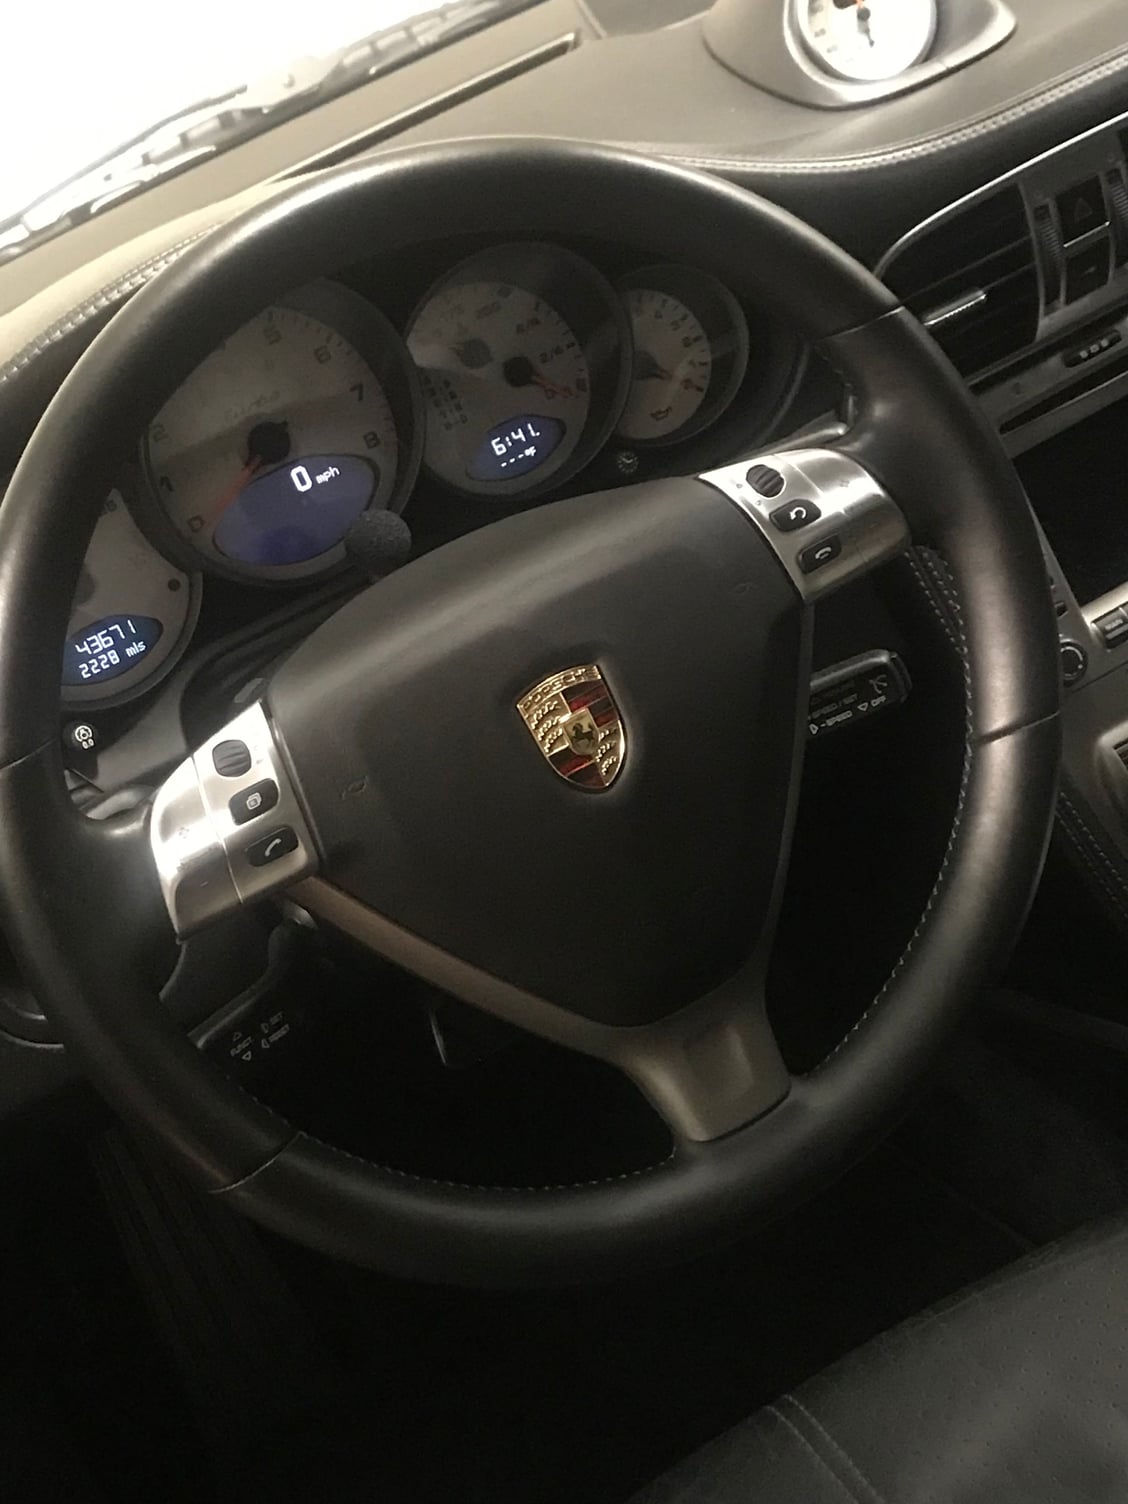 Interior/Upholstery - 997 TT steering wheel - Used - 2005 to 2009 Porsche 911 - La, CA 90274, United States